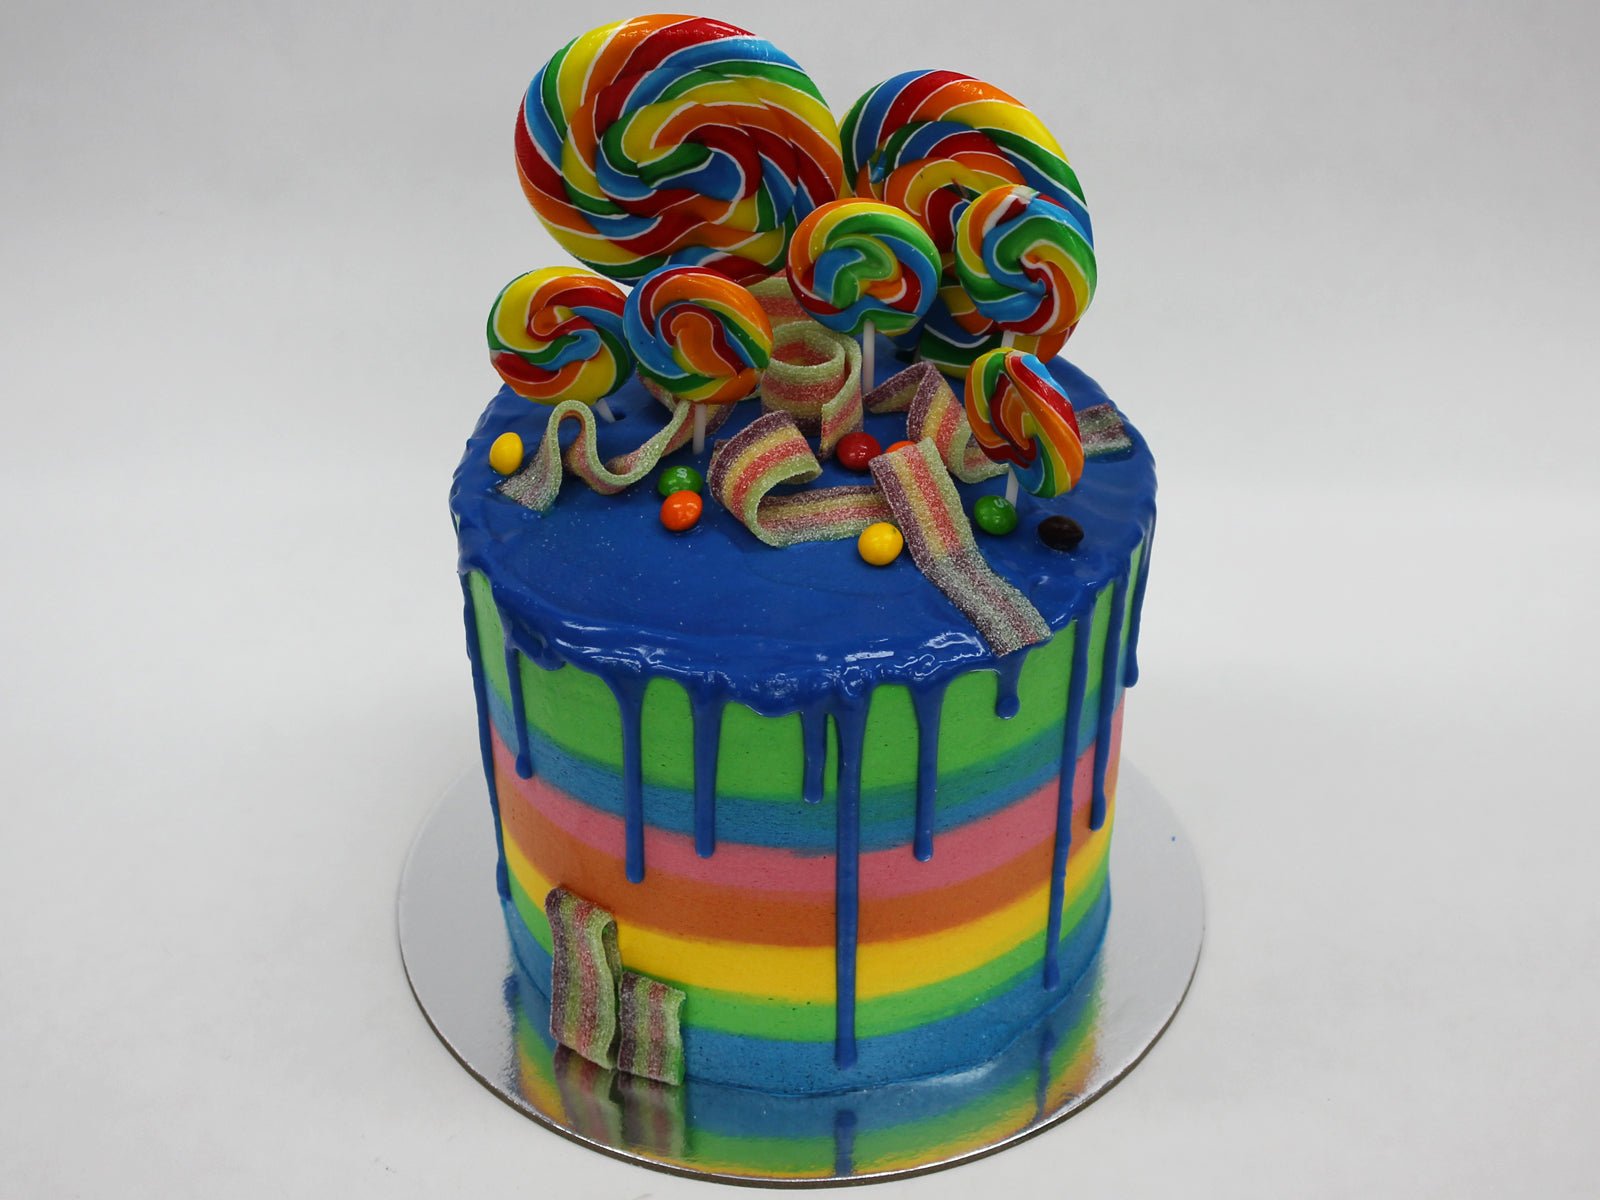 Lollipop candy cake - Sugar Rush Cakes | Sugar Rush Cakes